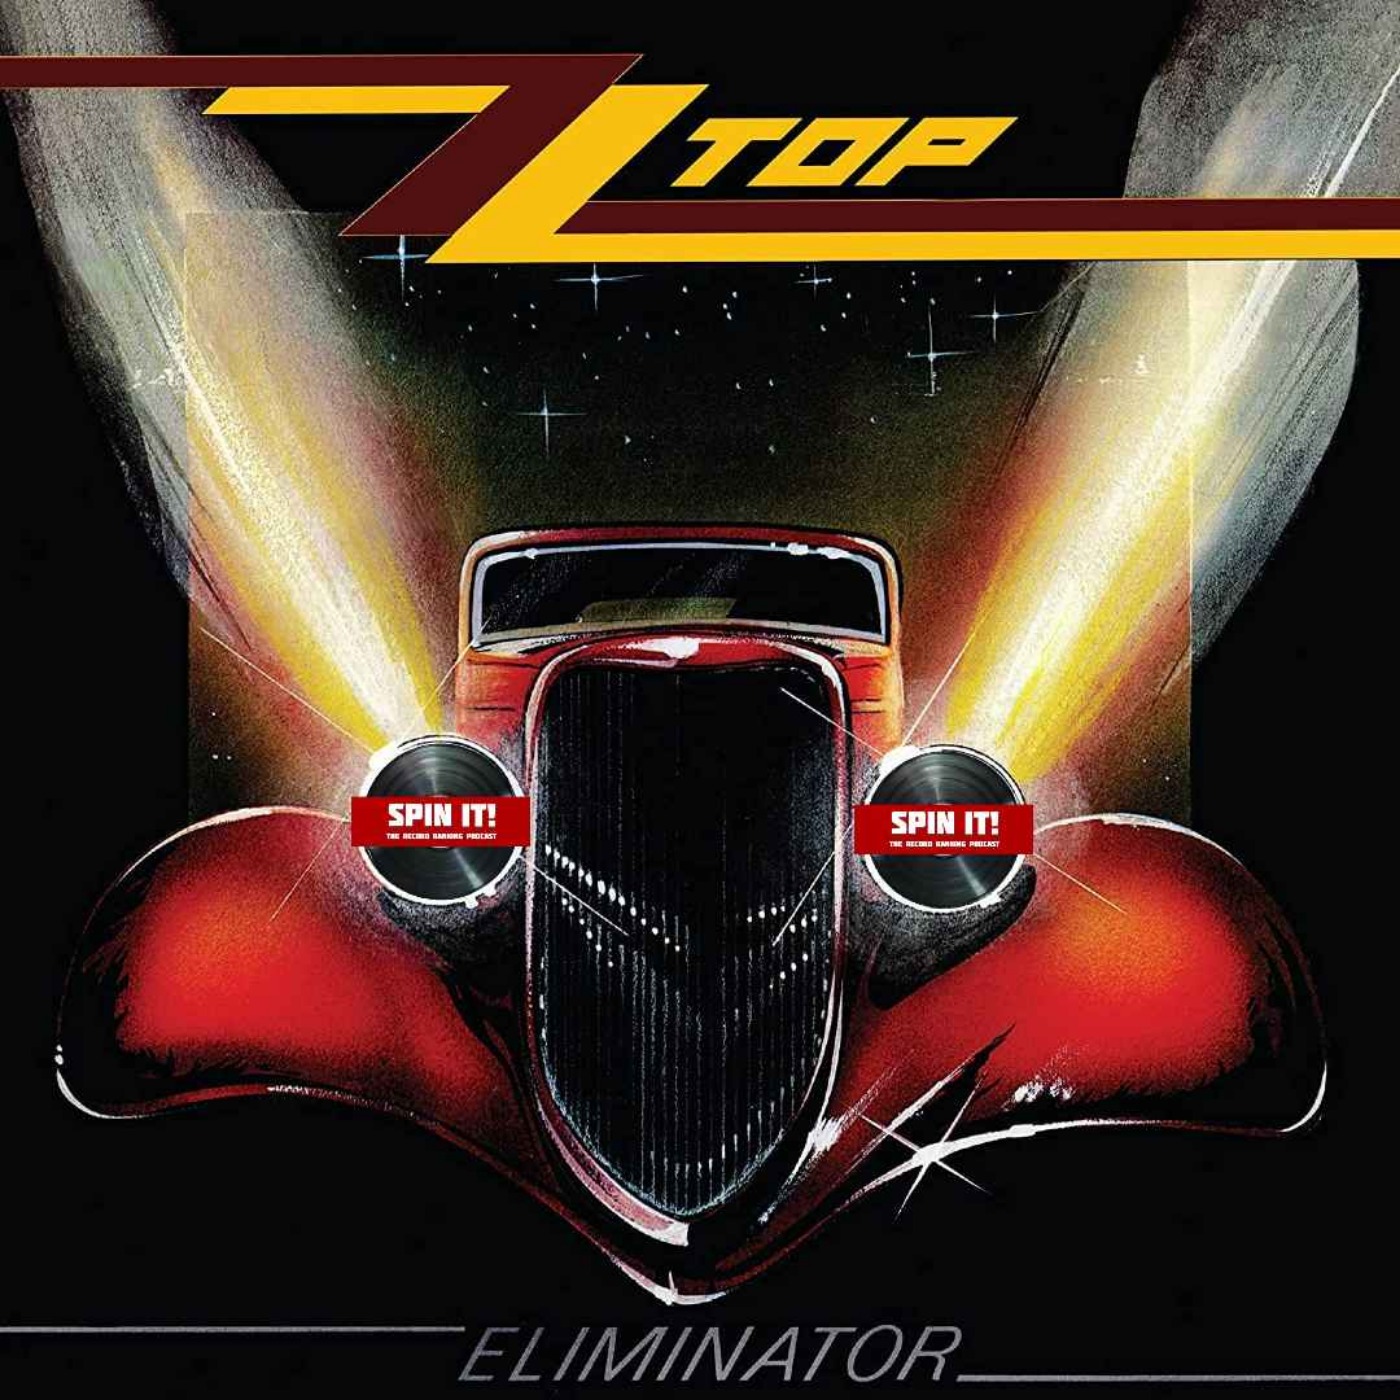 Eliminator - ZZ Top: Episode 89